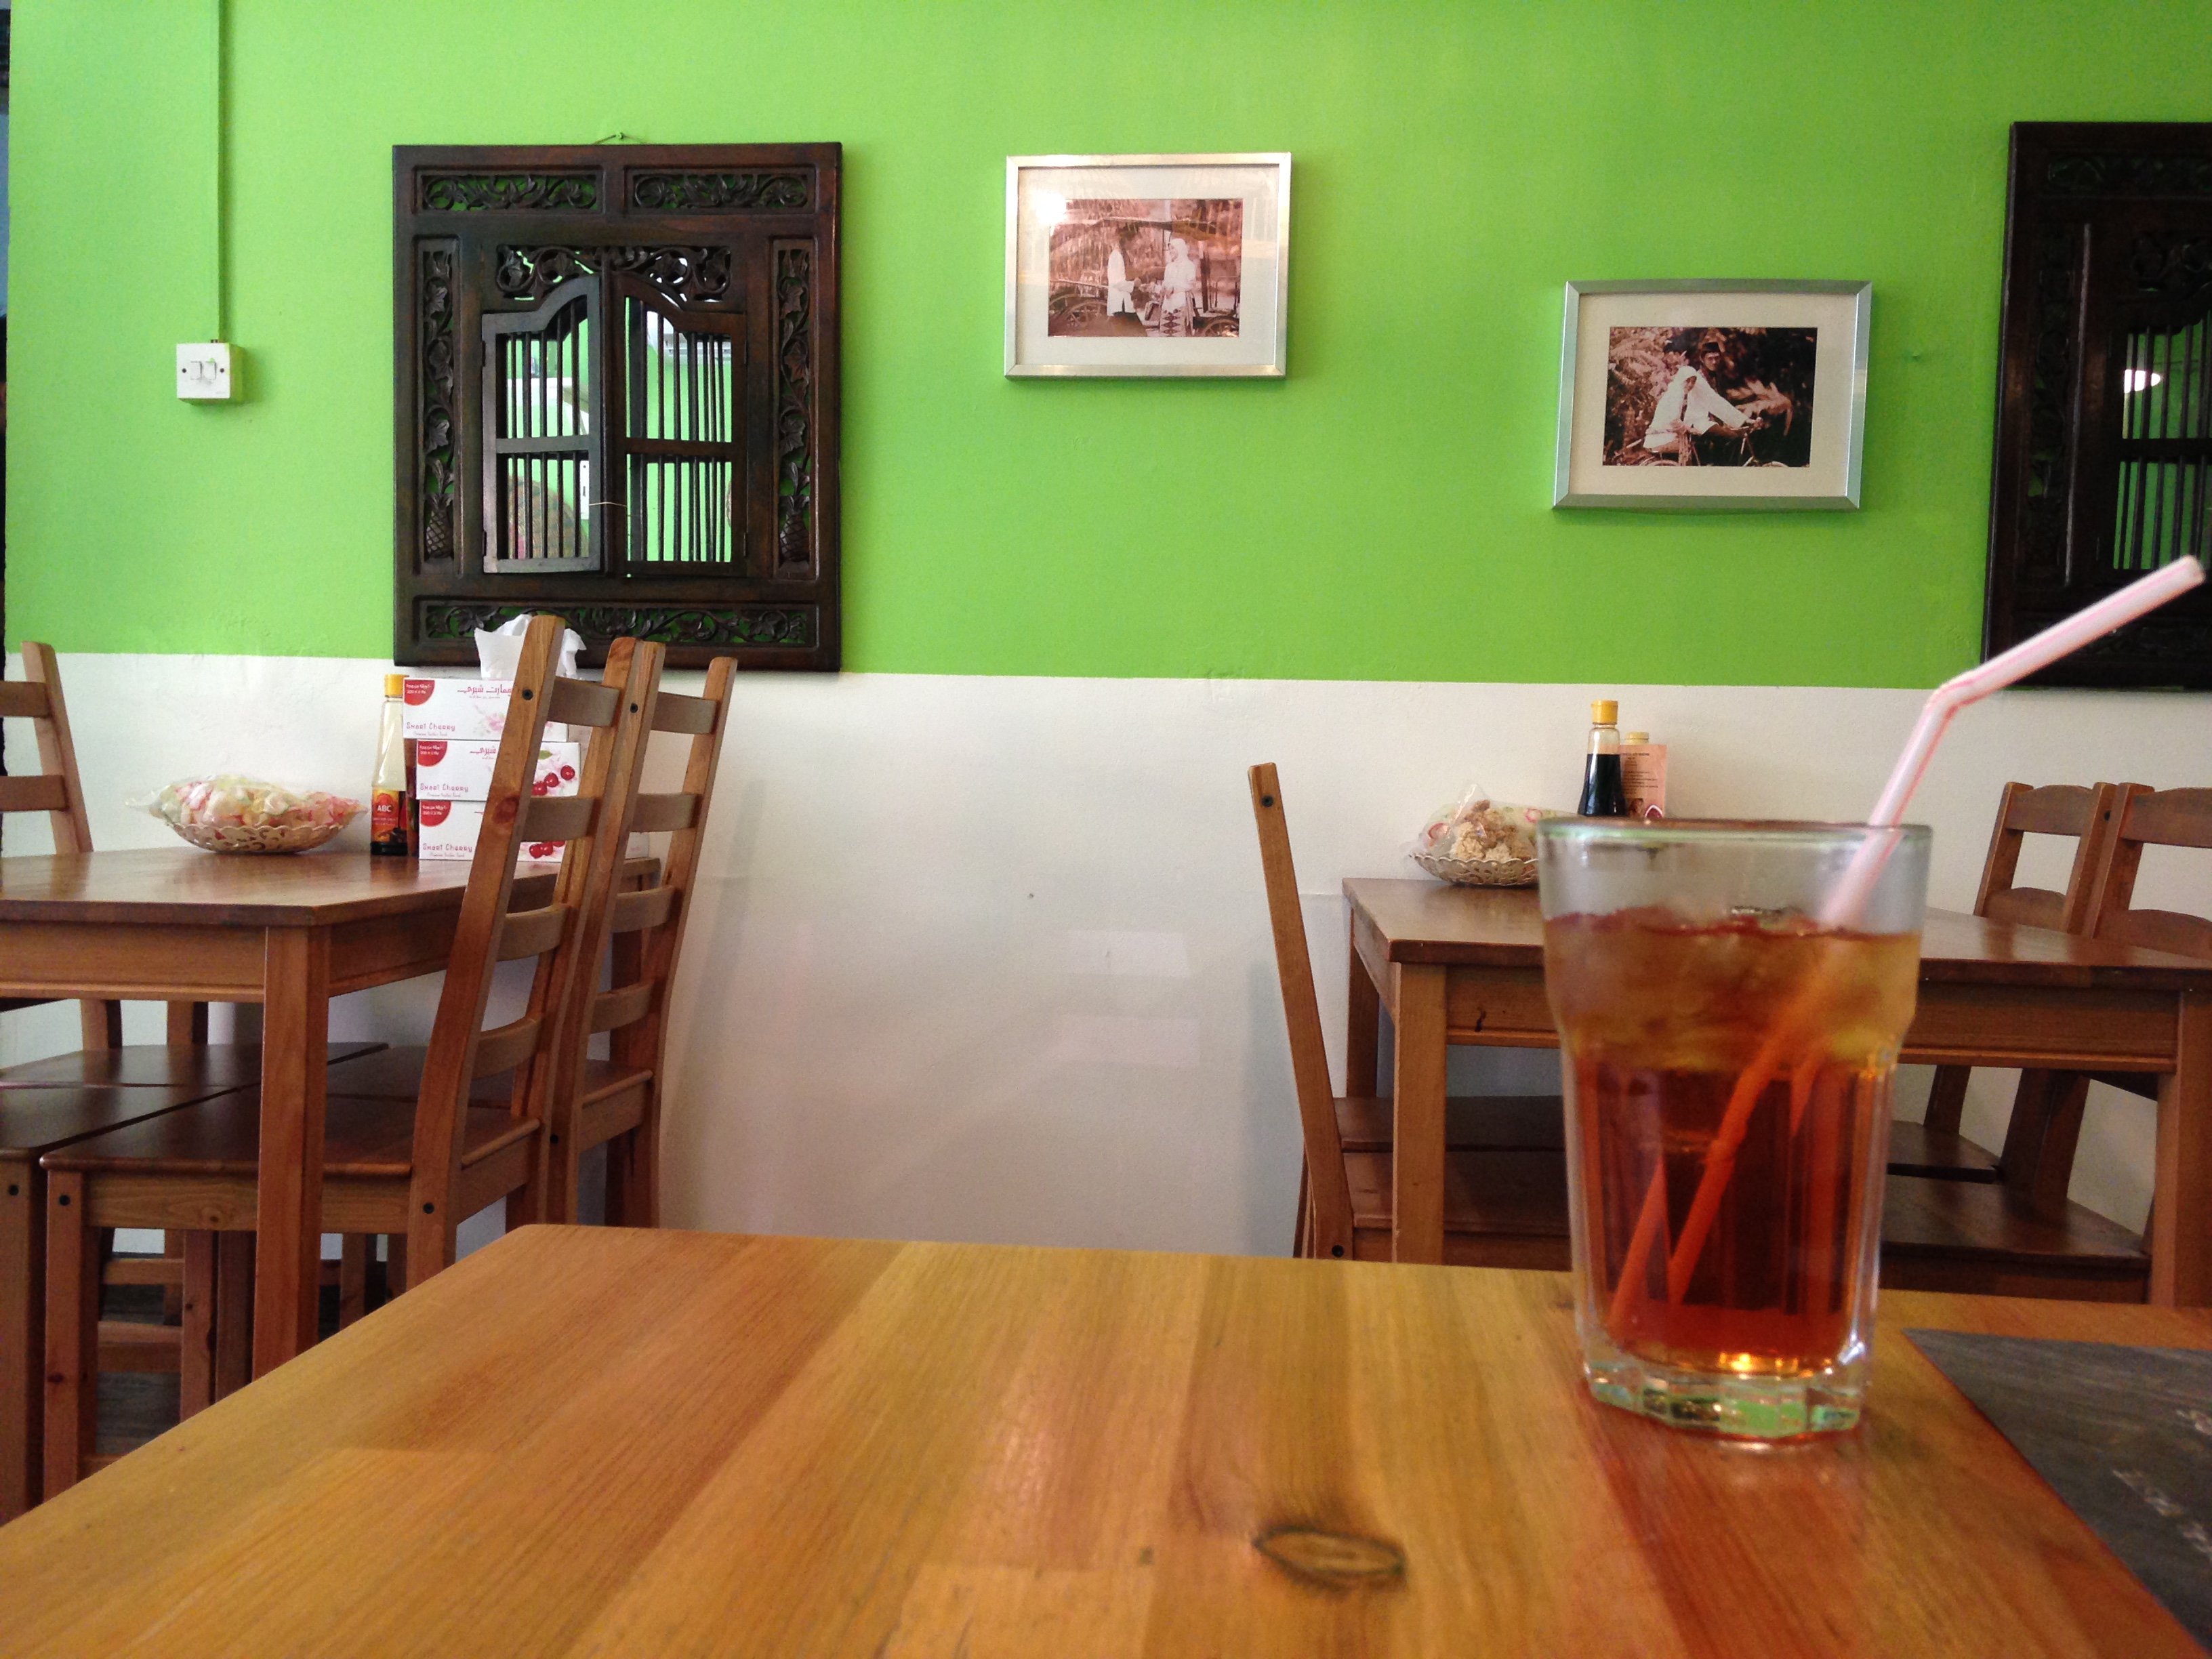 Interior Betawi Cafe (c) Prisca Lohuis/Travelingyuk